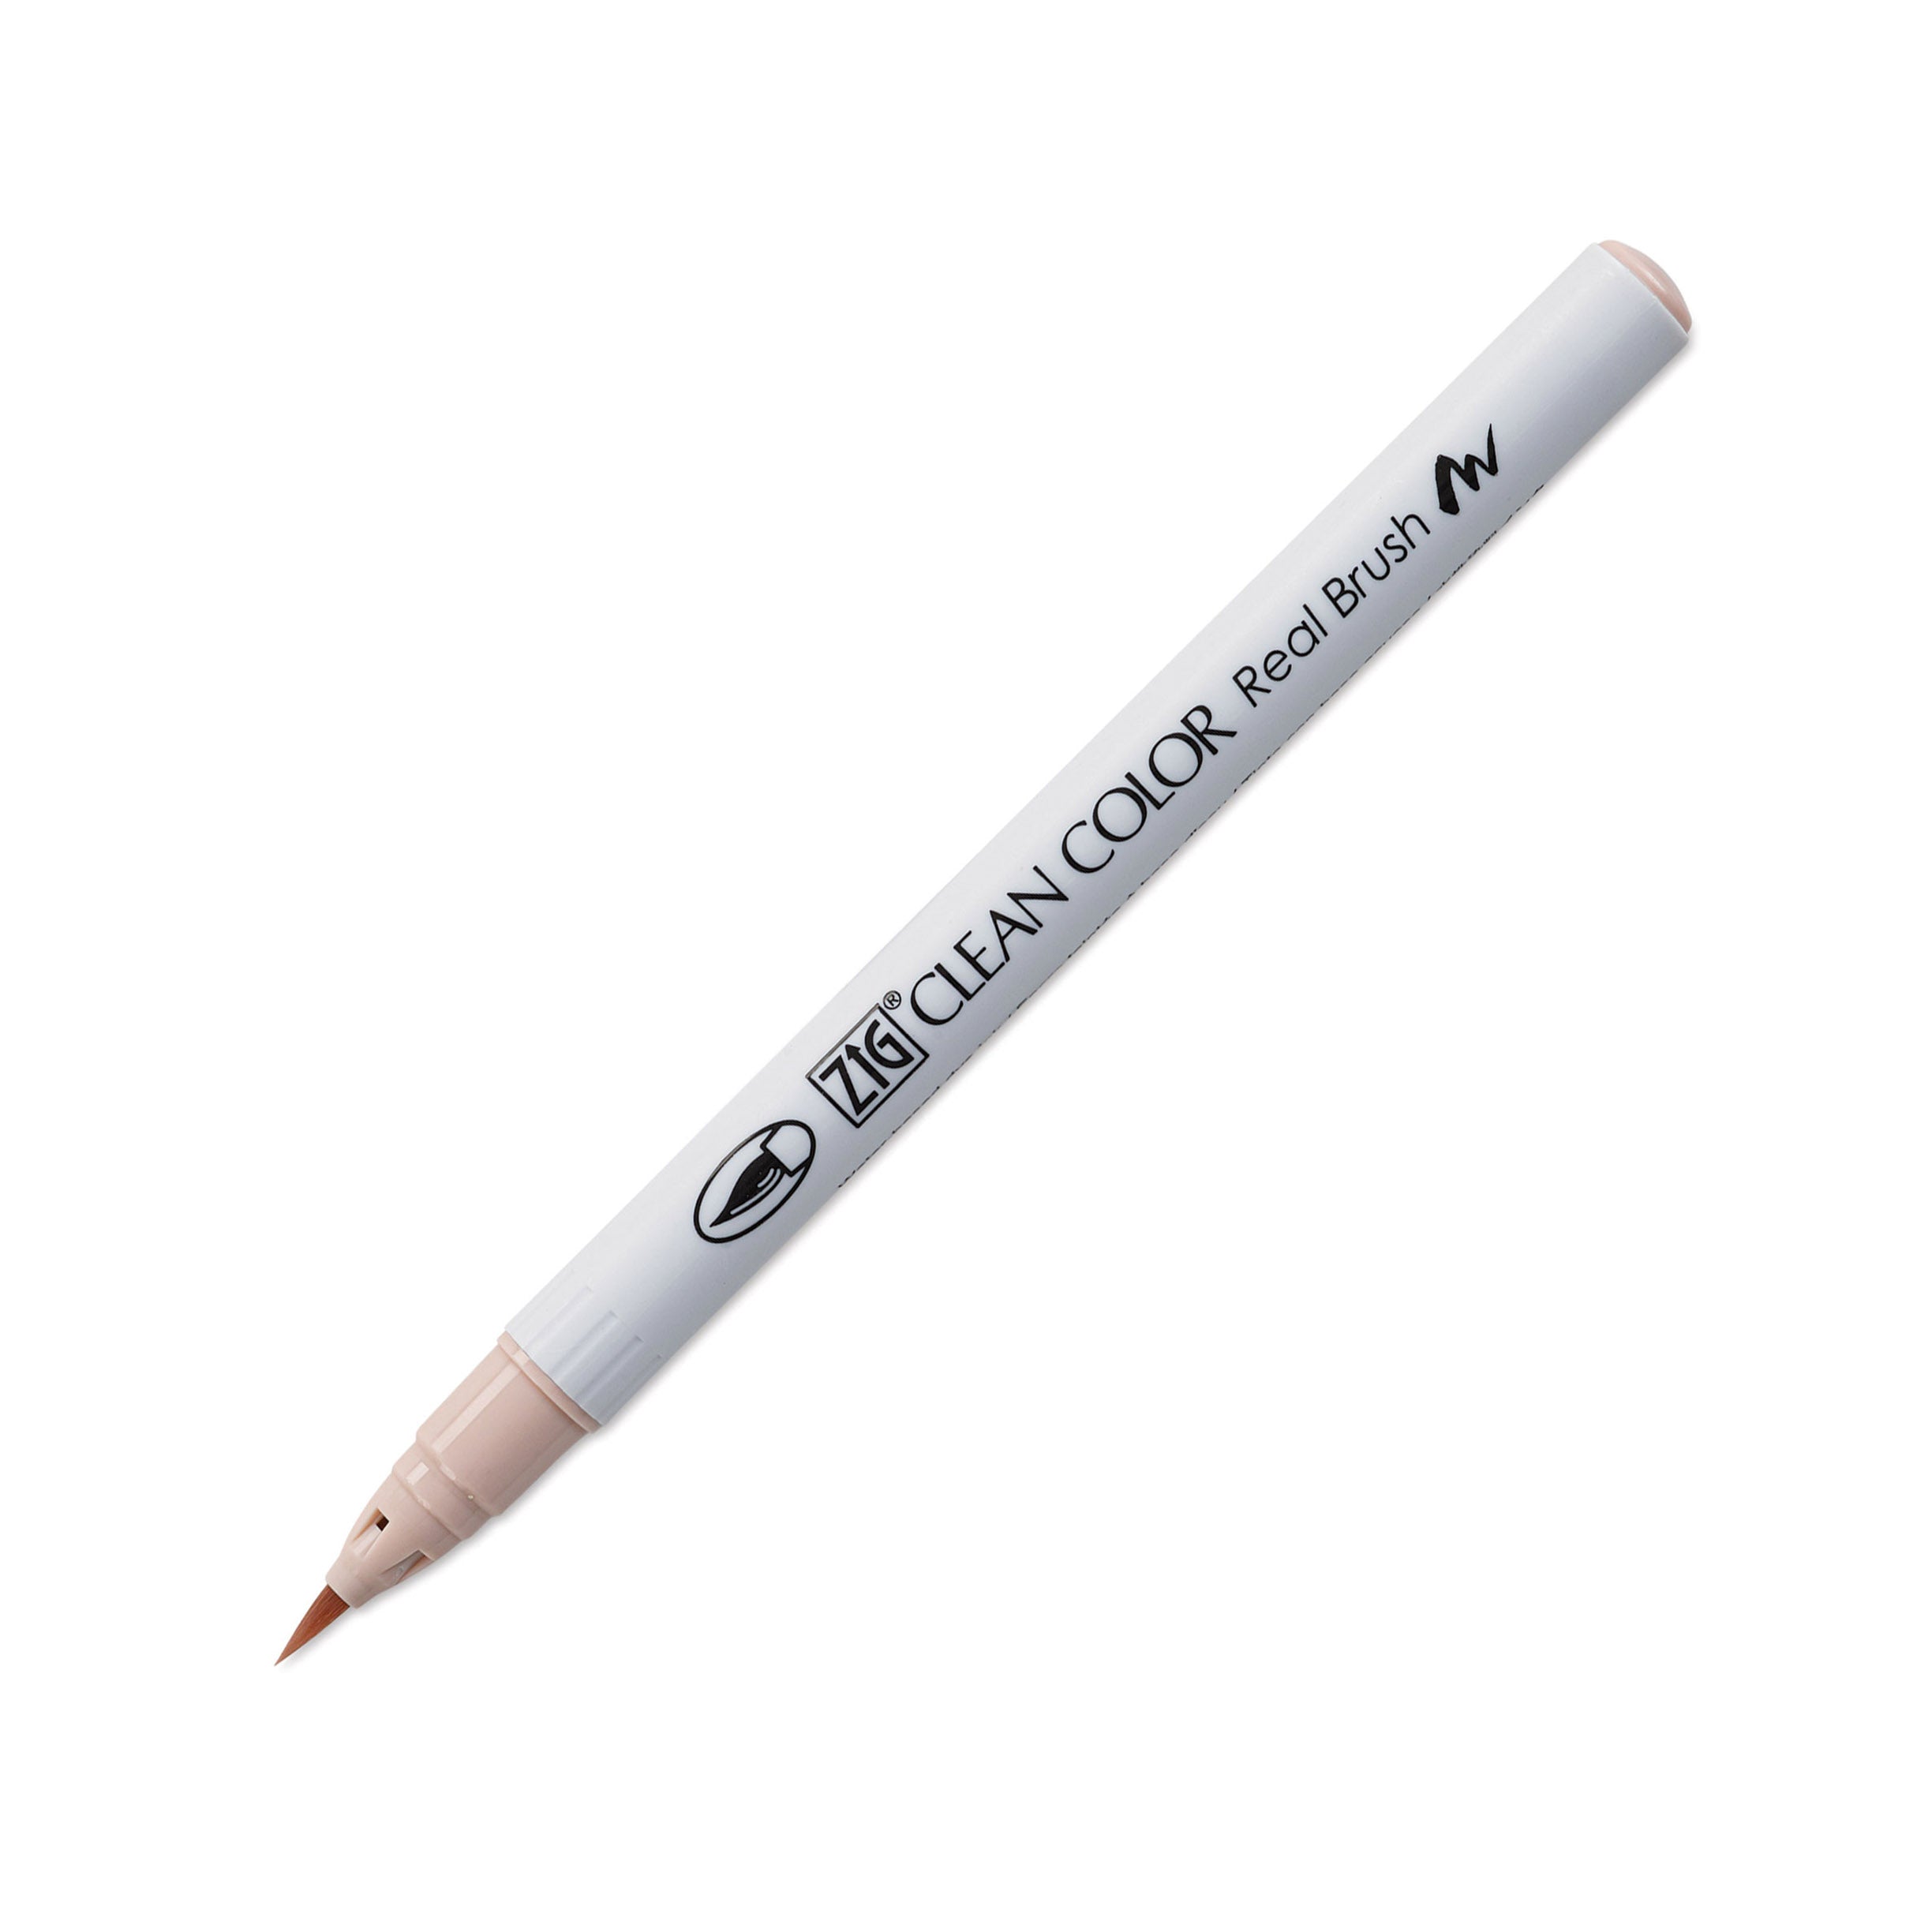 Kuretake-ZIG Clean Color Real Brush Pen